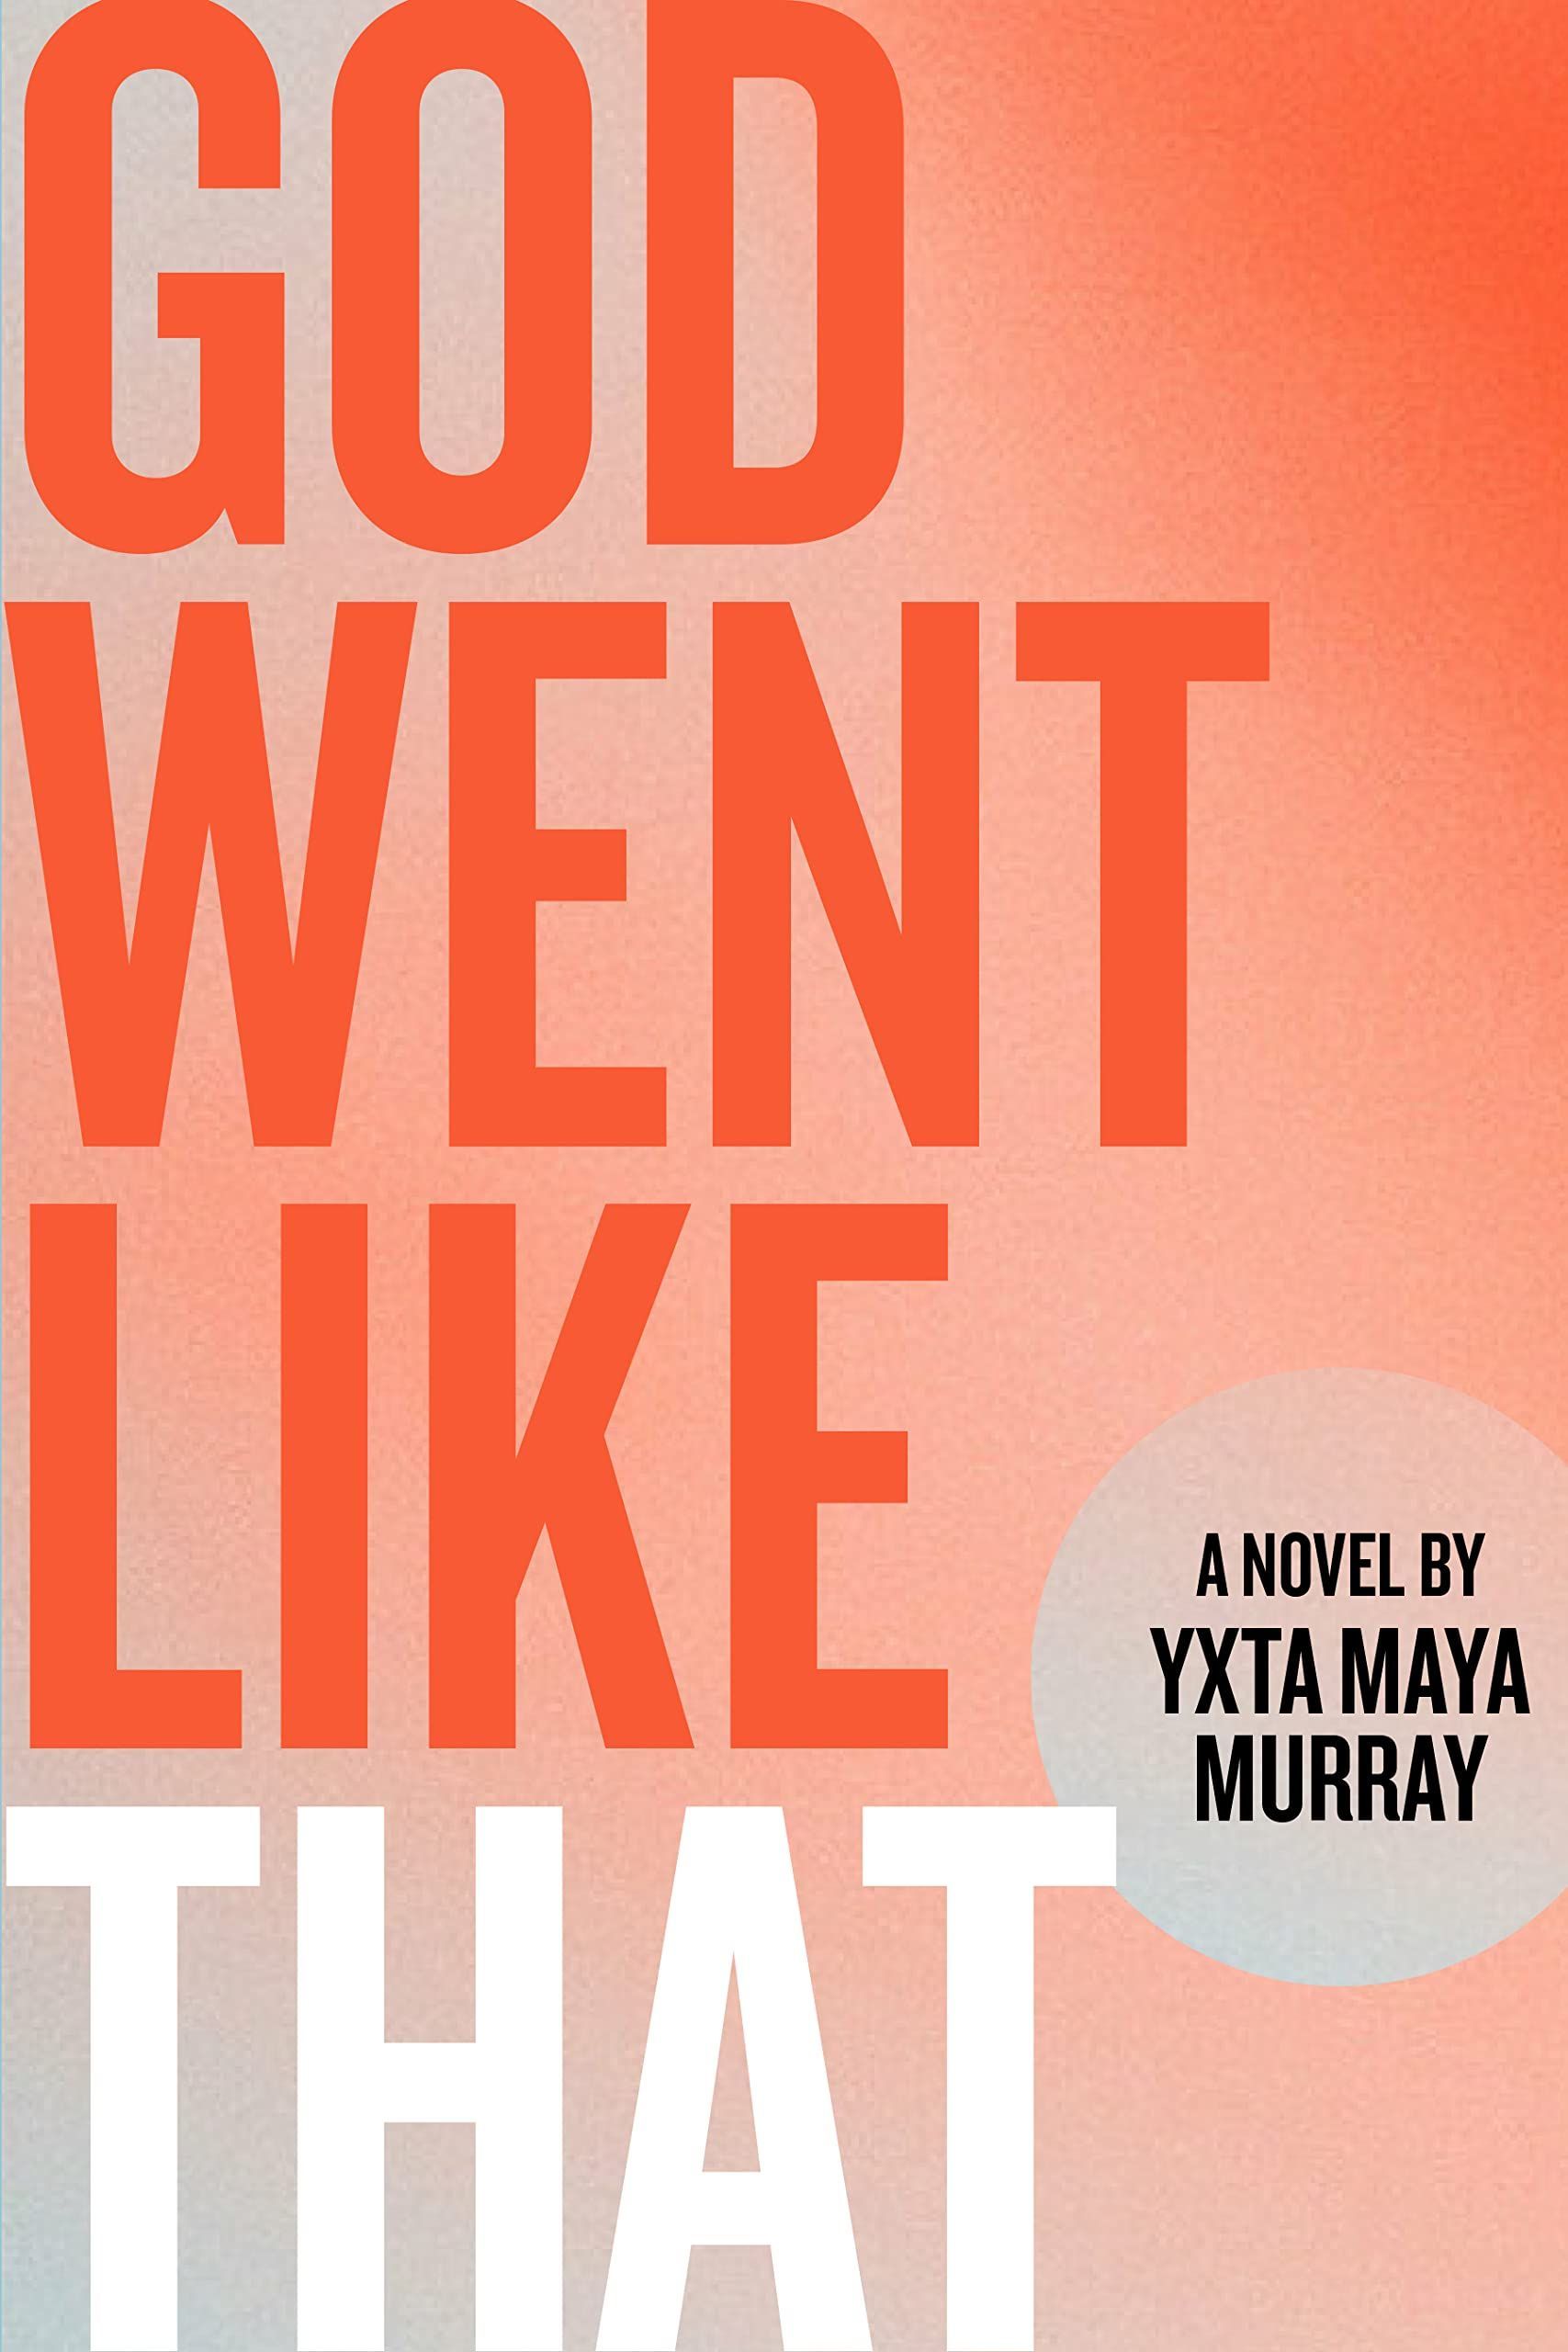 A Worrying Radiance: On Yxta Maya Murray’s “God Went Like That”